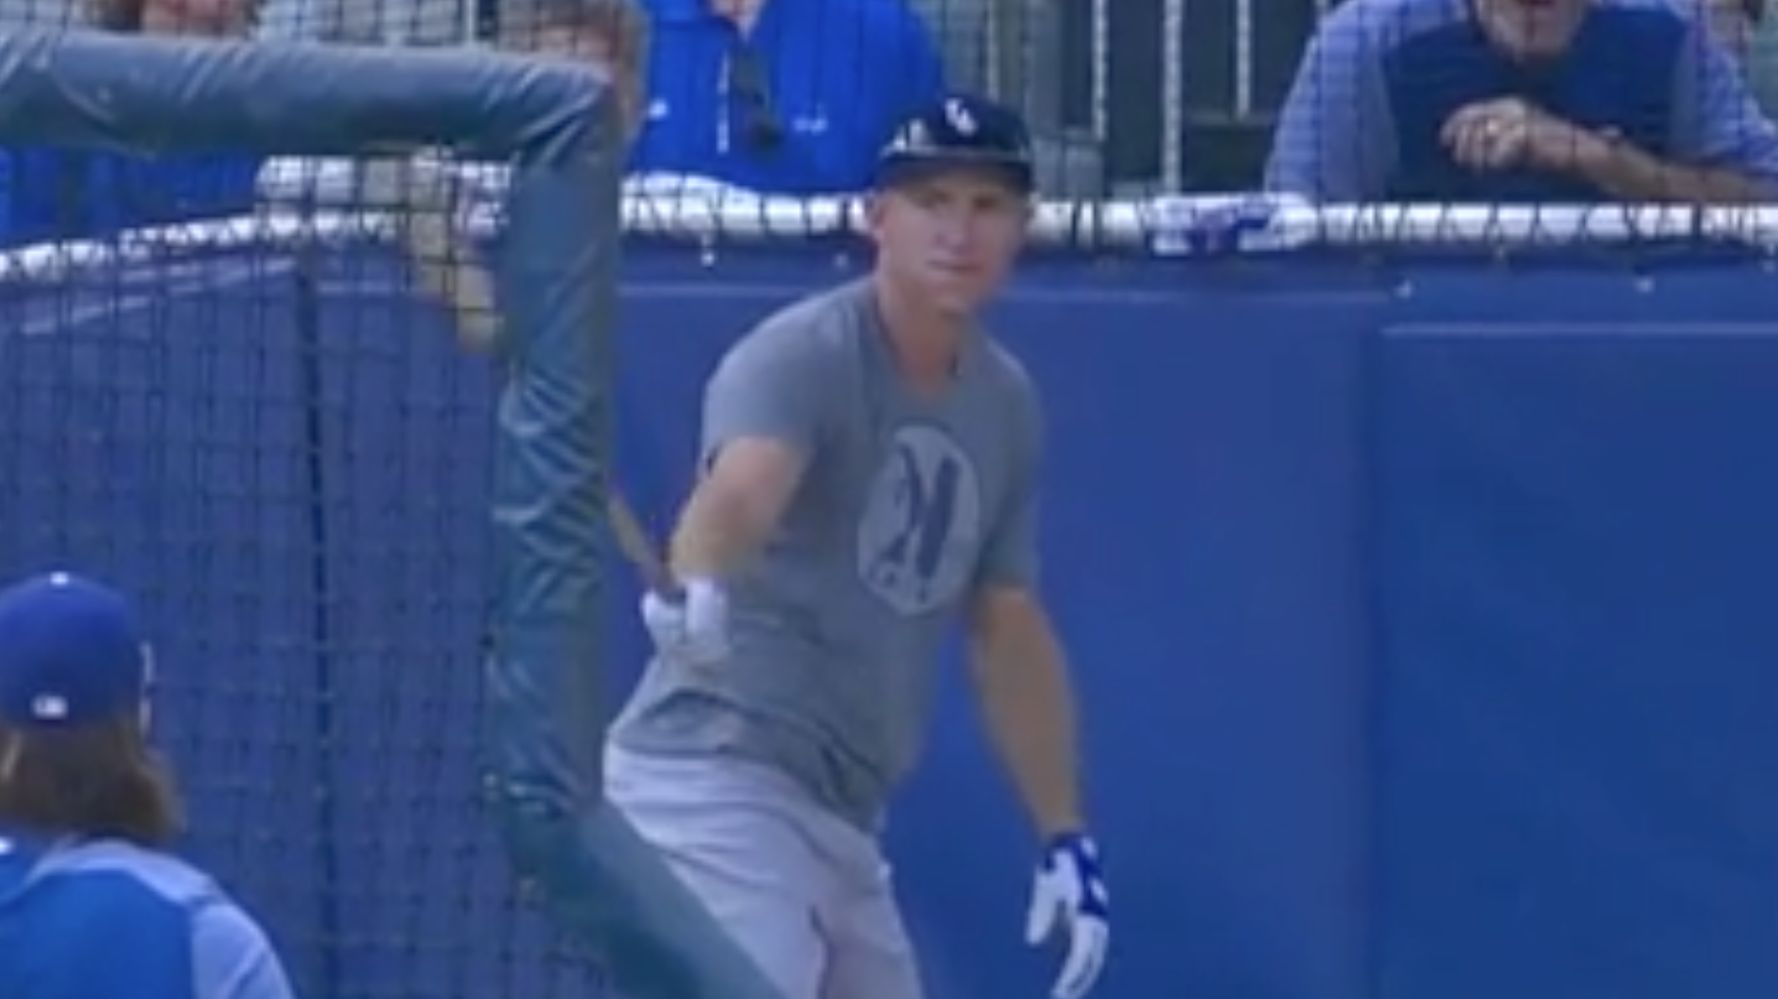 Braves announcers rip Dodgers for 'unprofessional' BP attire